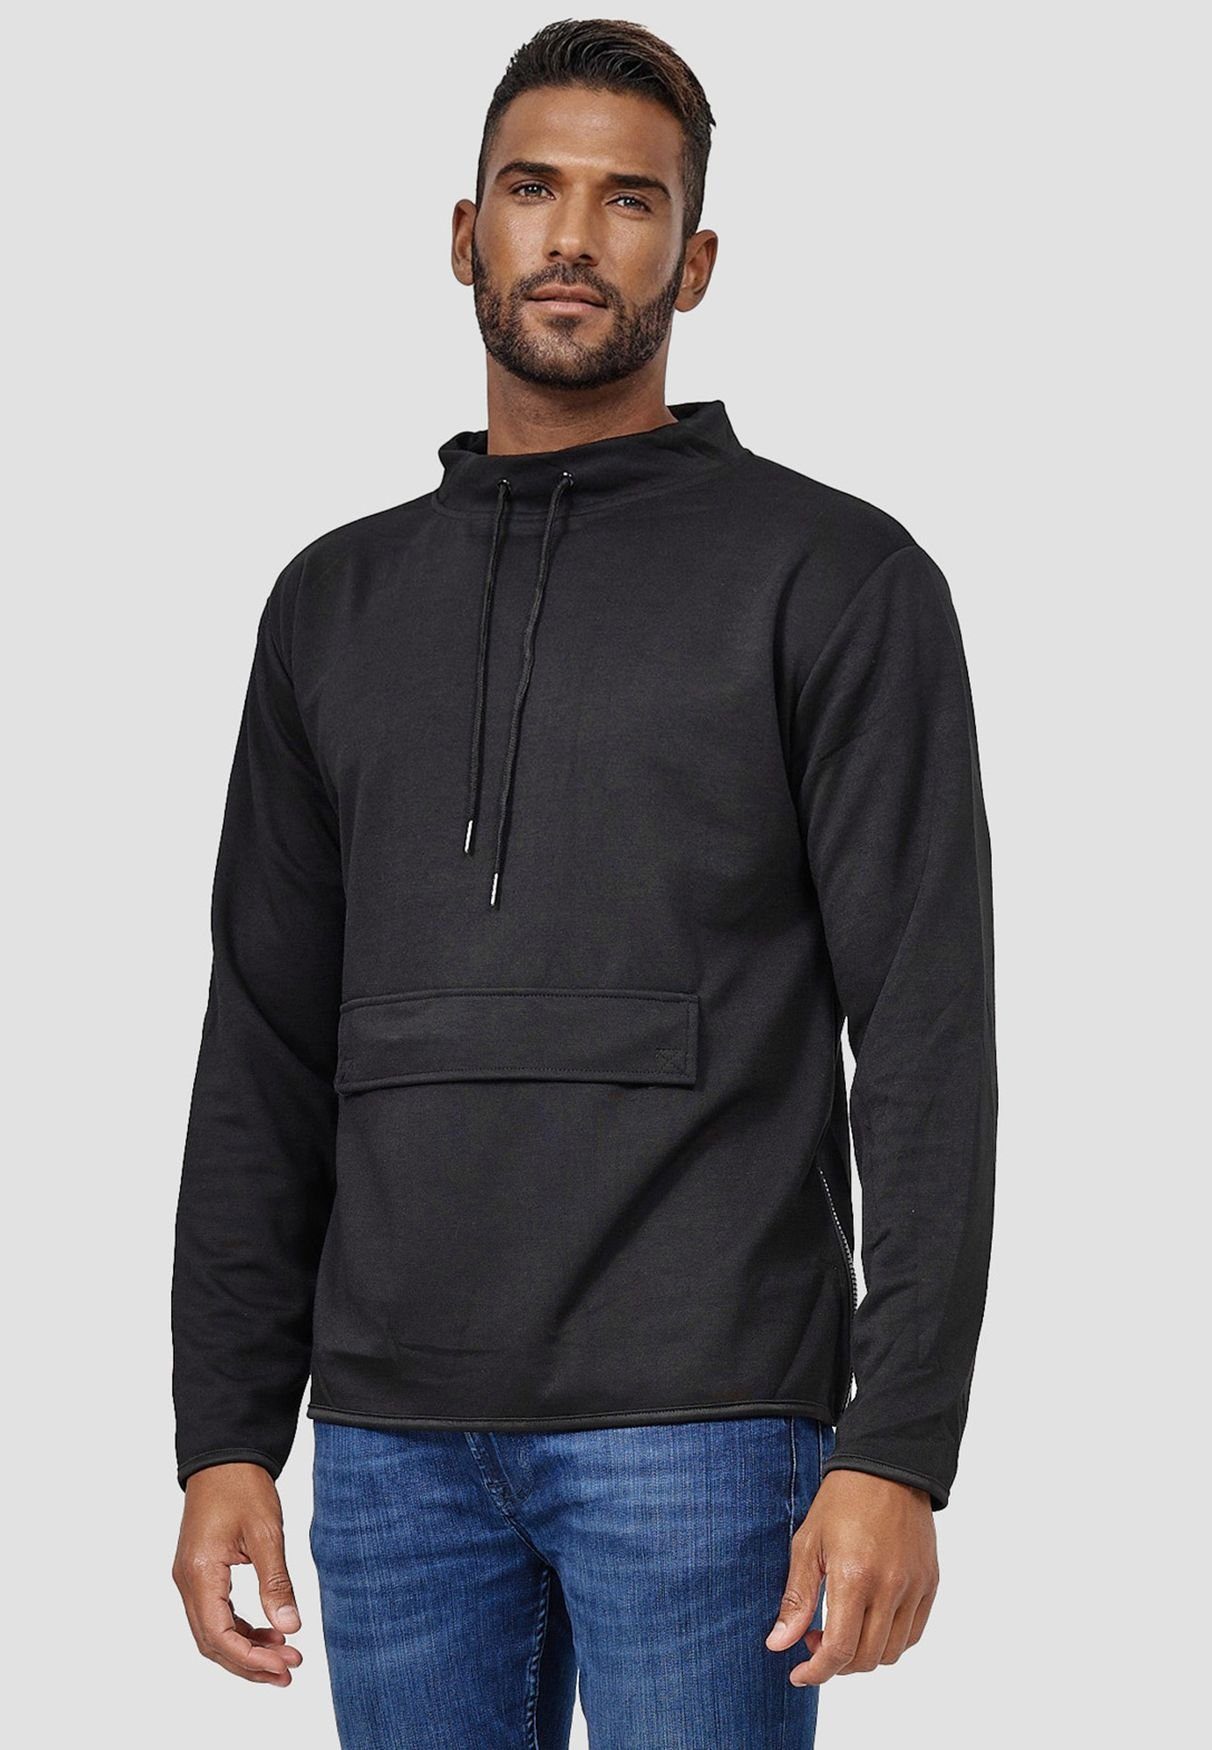 Egomaxx Sweatshirt »3842« (Stehkragen, 1-tlg., regular fit) Herren  Longsleeve Sweater Sport Sweatshirt Pullover Zip Bauchtasche online kaufen  | OTTO